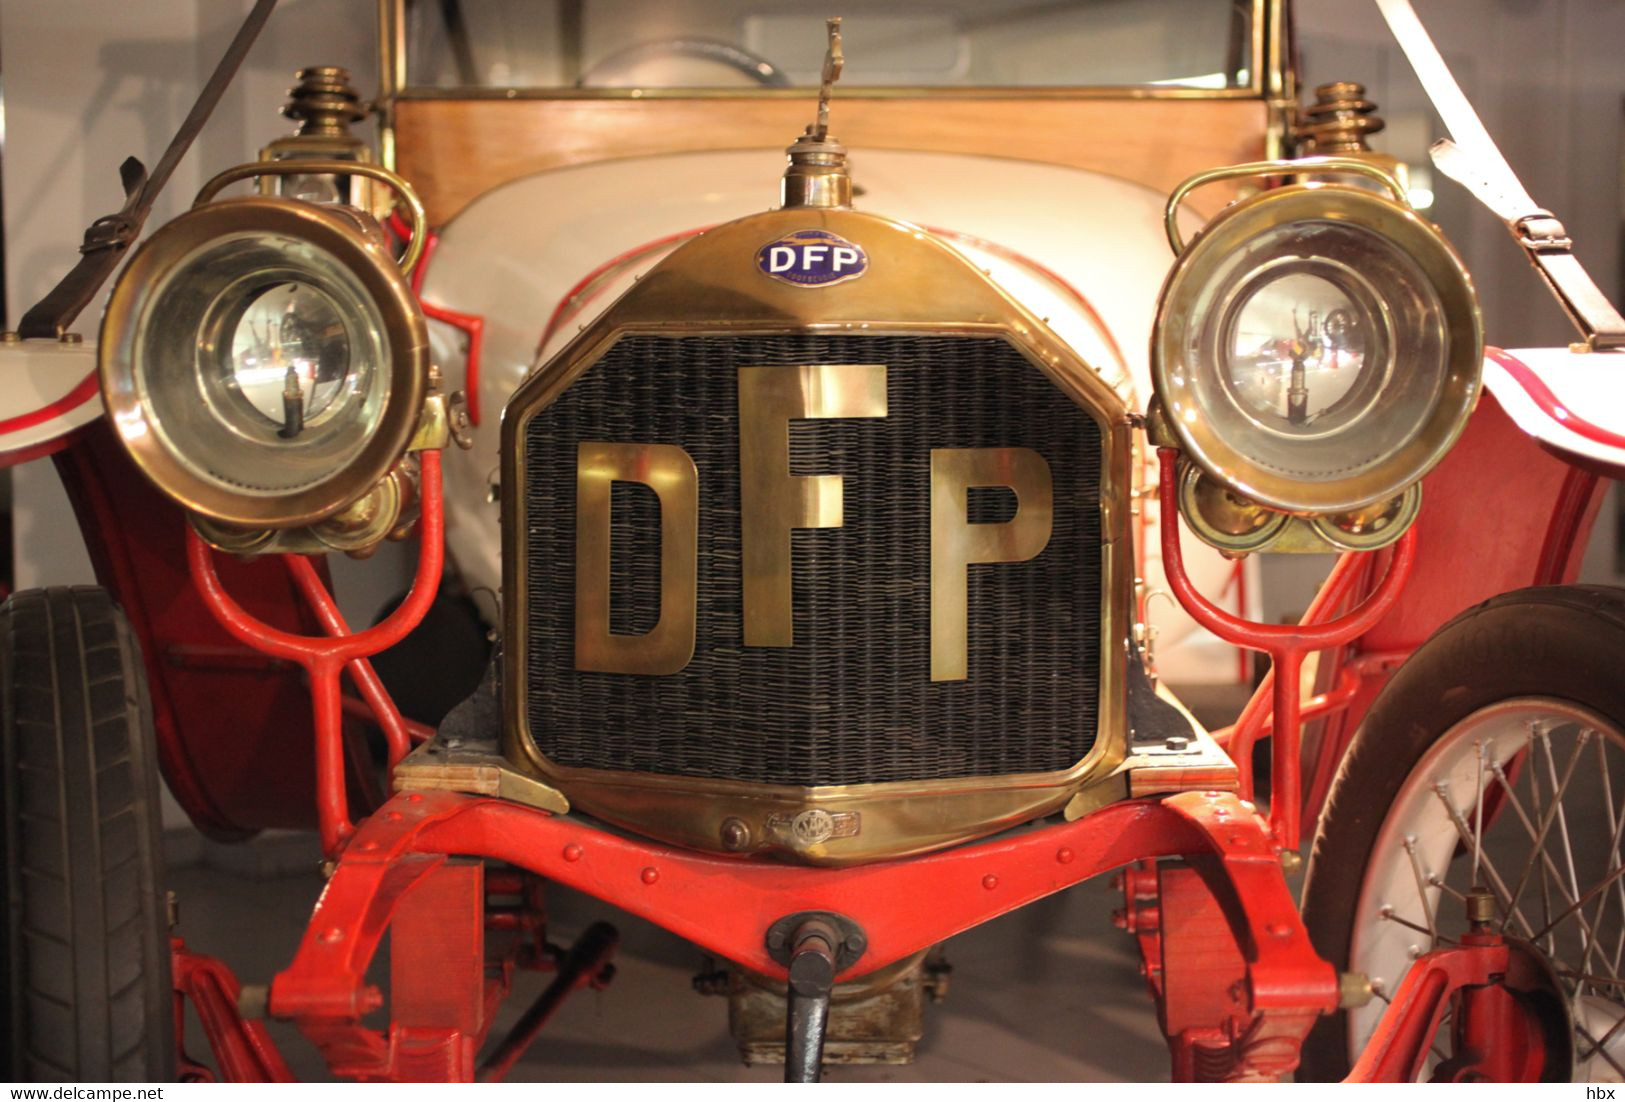 Automobiles Doriot, Flandrin & Parant - 1918 - Cars